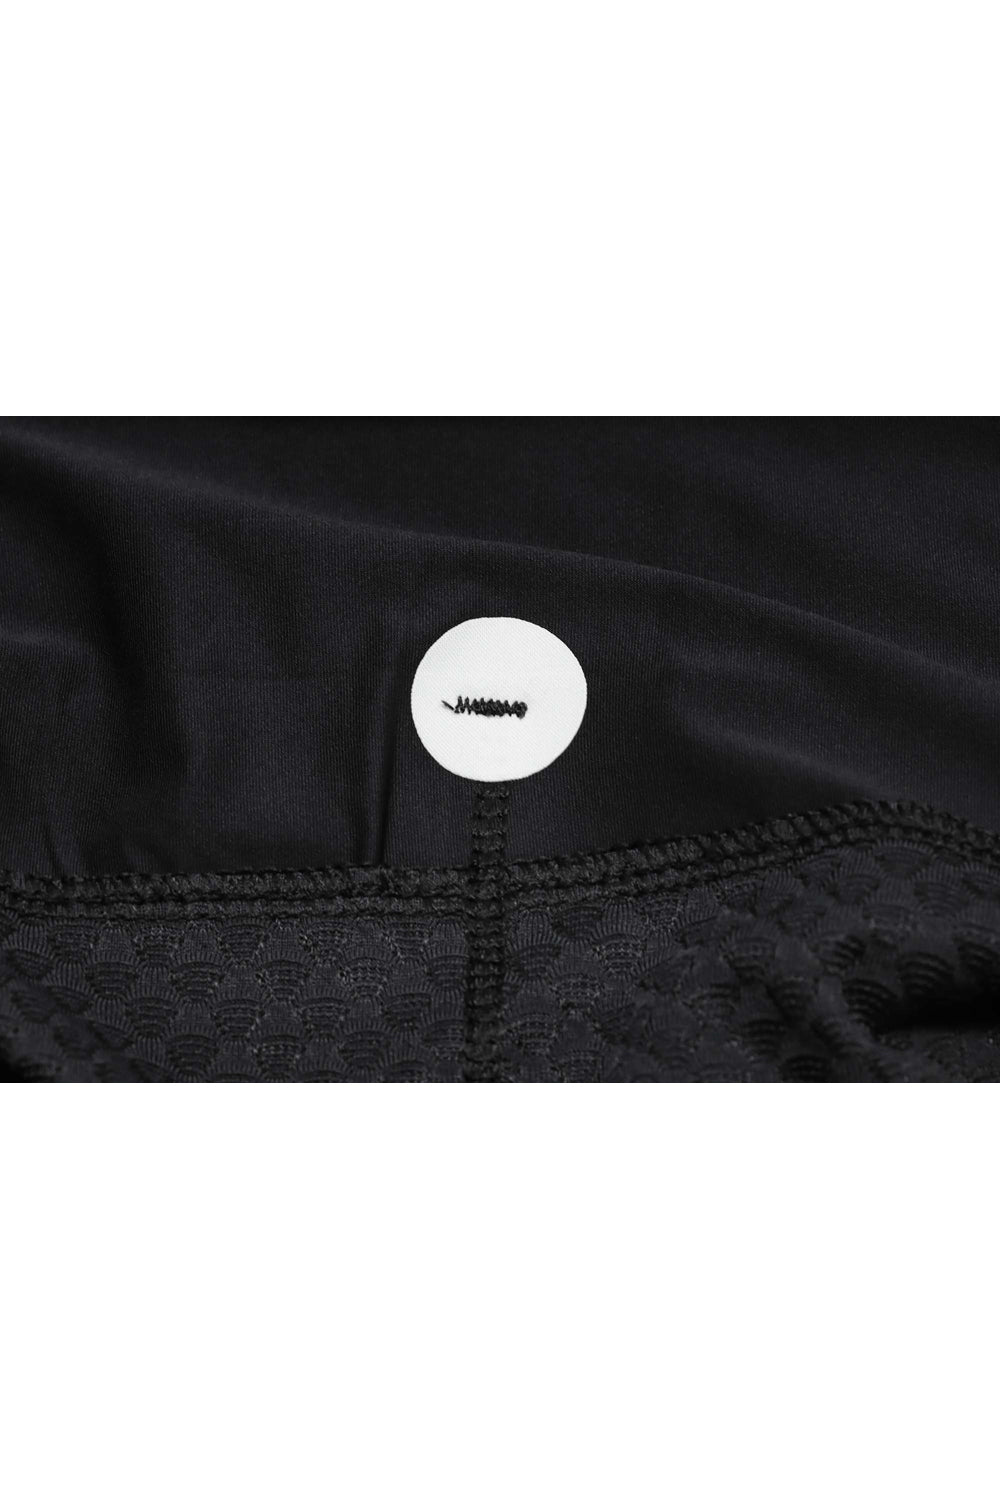 Sundried Sport Pianura Men's Black Short Sleeve Cycle Jersey Short Sleeve Jersey Activewear